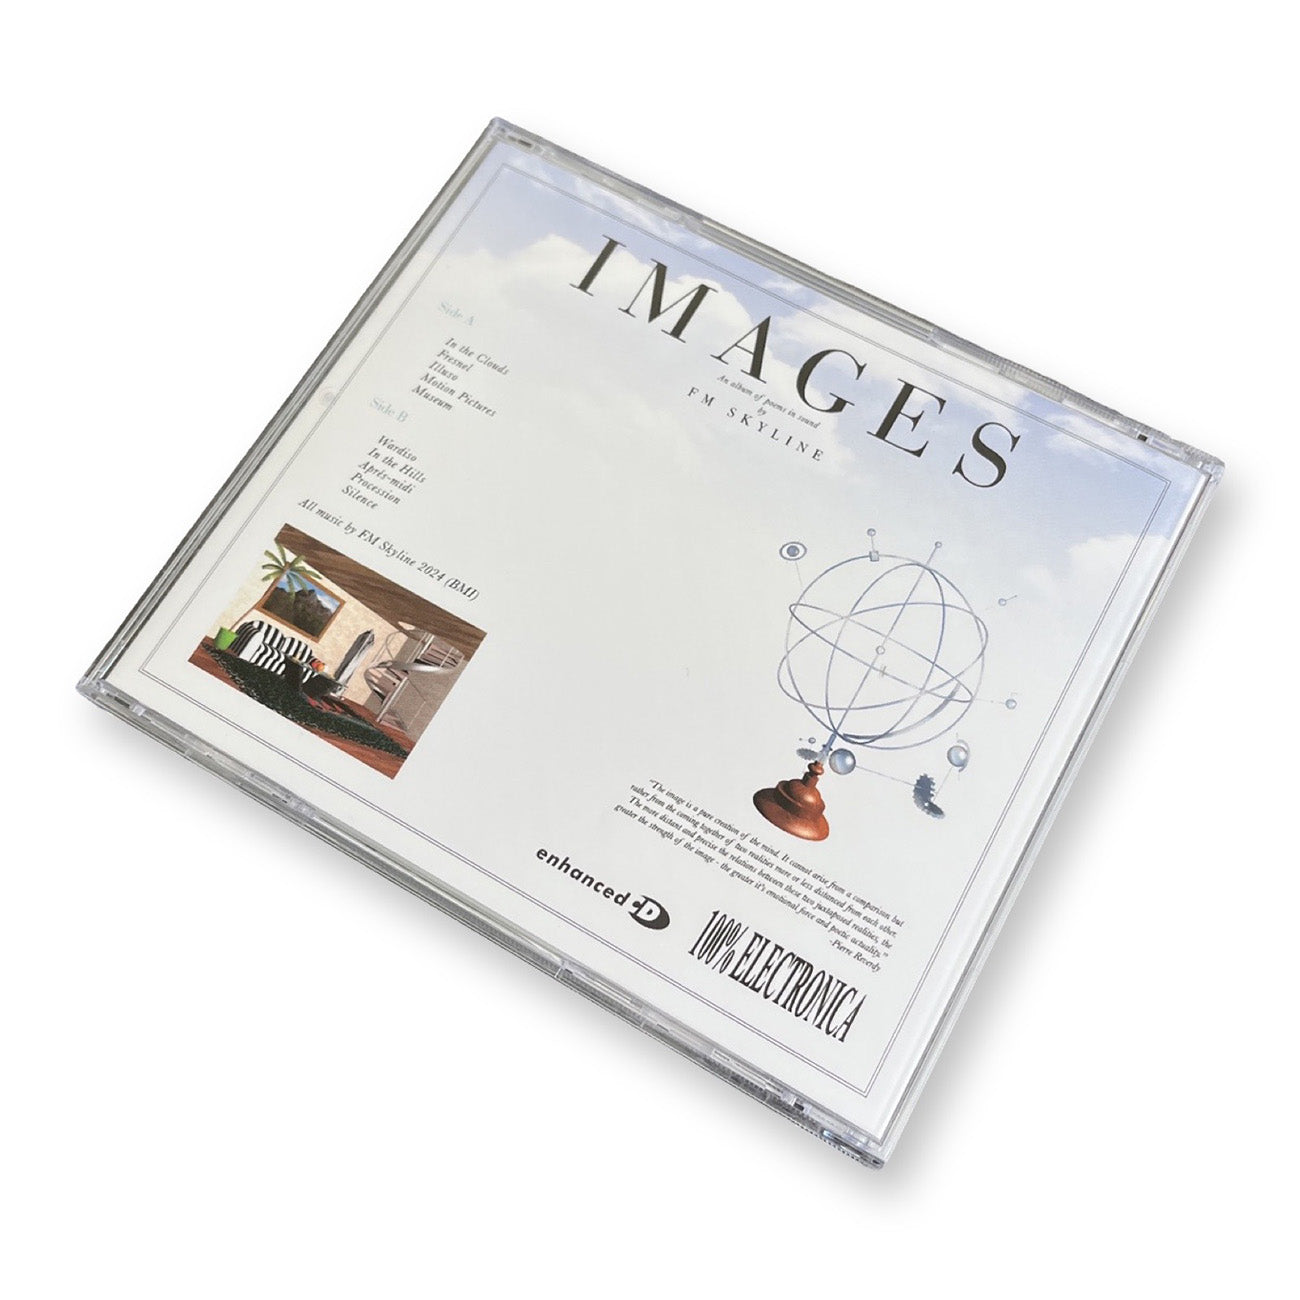 Images Enhanced CD